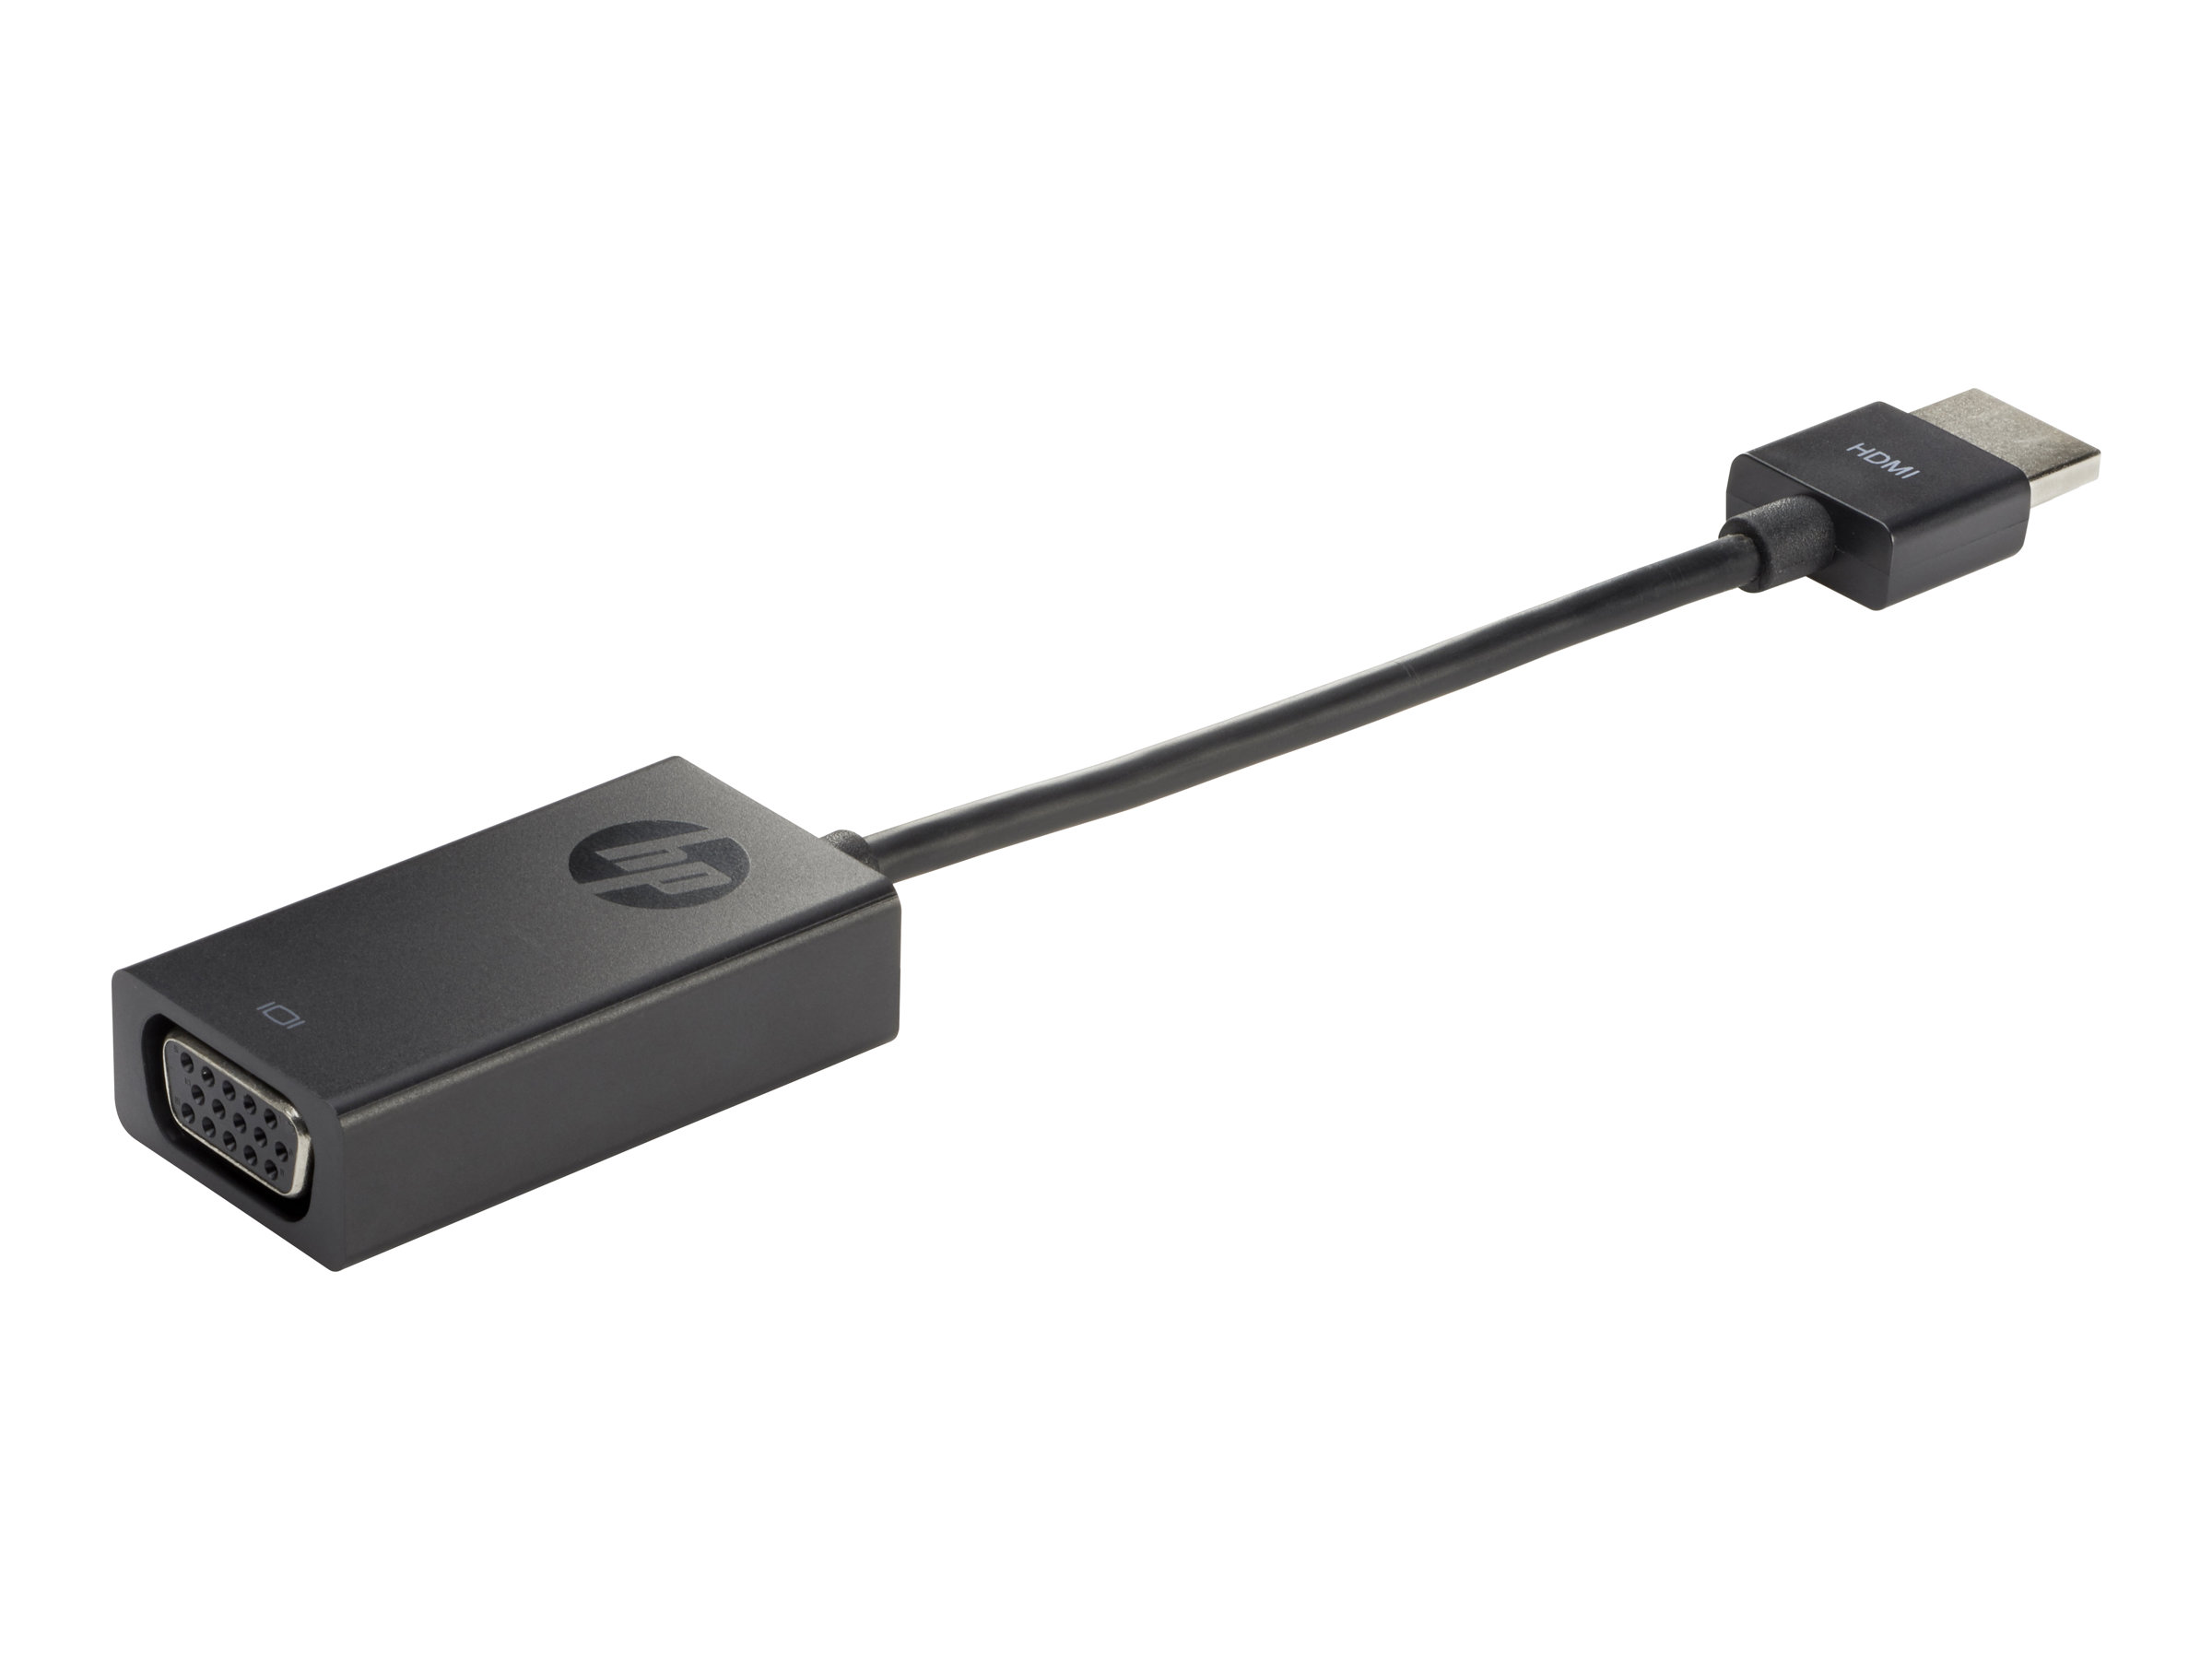 HP HDMI to VGA Display Adapter - Adaptateur vidéo - HD-15 (VGA) femelle pour HDMI mâle - H4F02AA#AC3 - Câbles HDMI